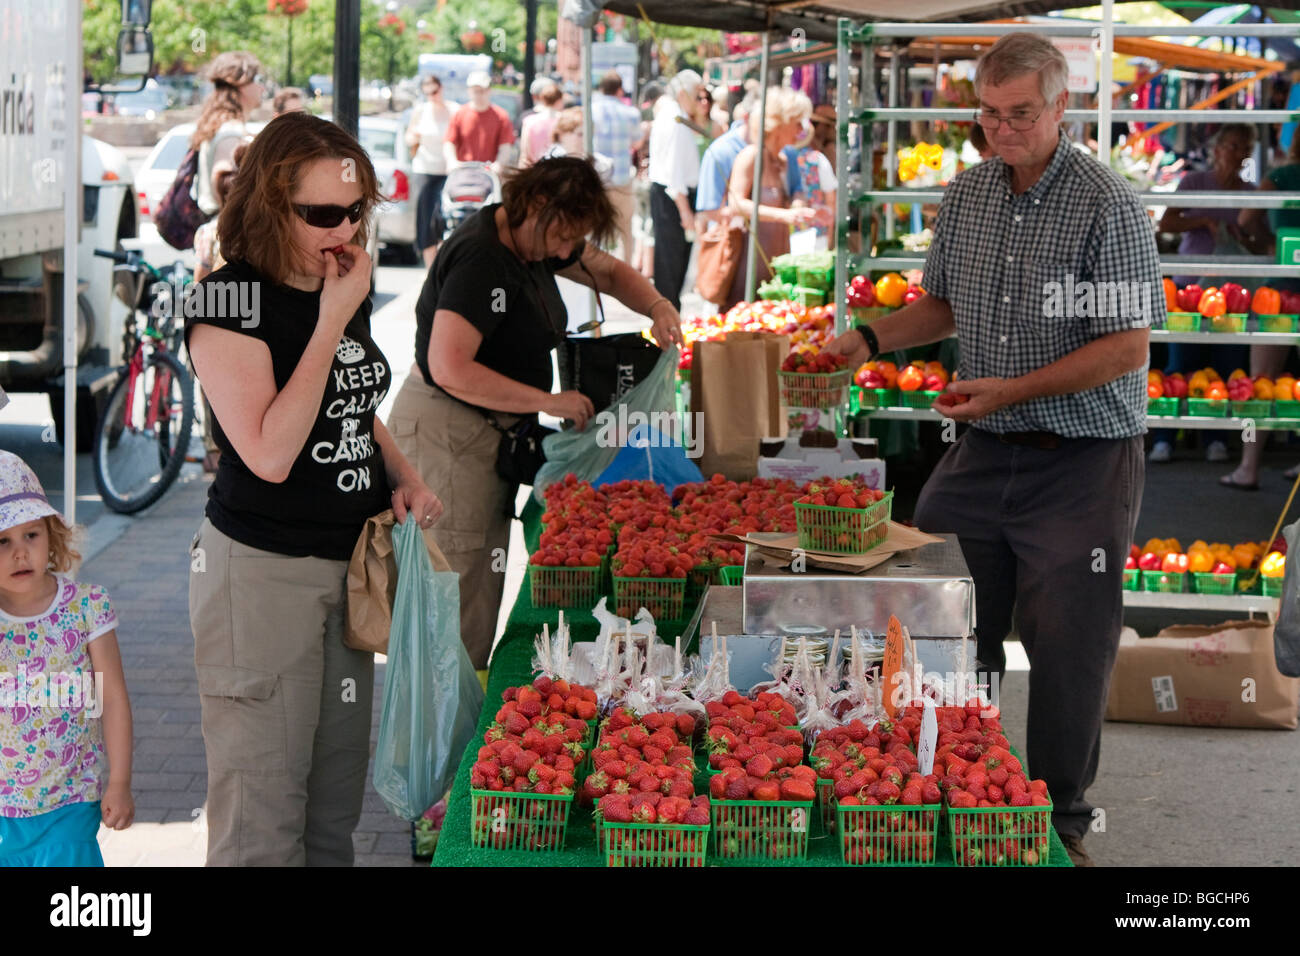 Woman sampling a strawberry at the farmer's market, St. Lawrence Market, Toronto, Canada Stock Photo